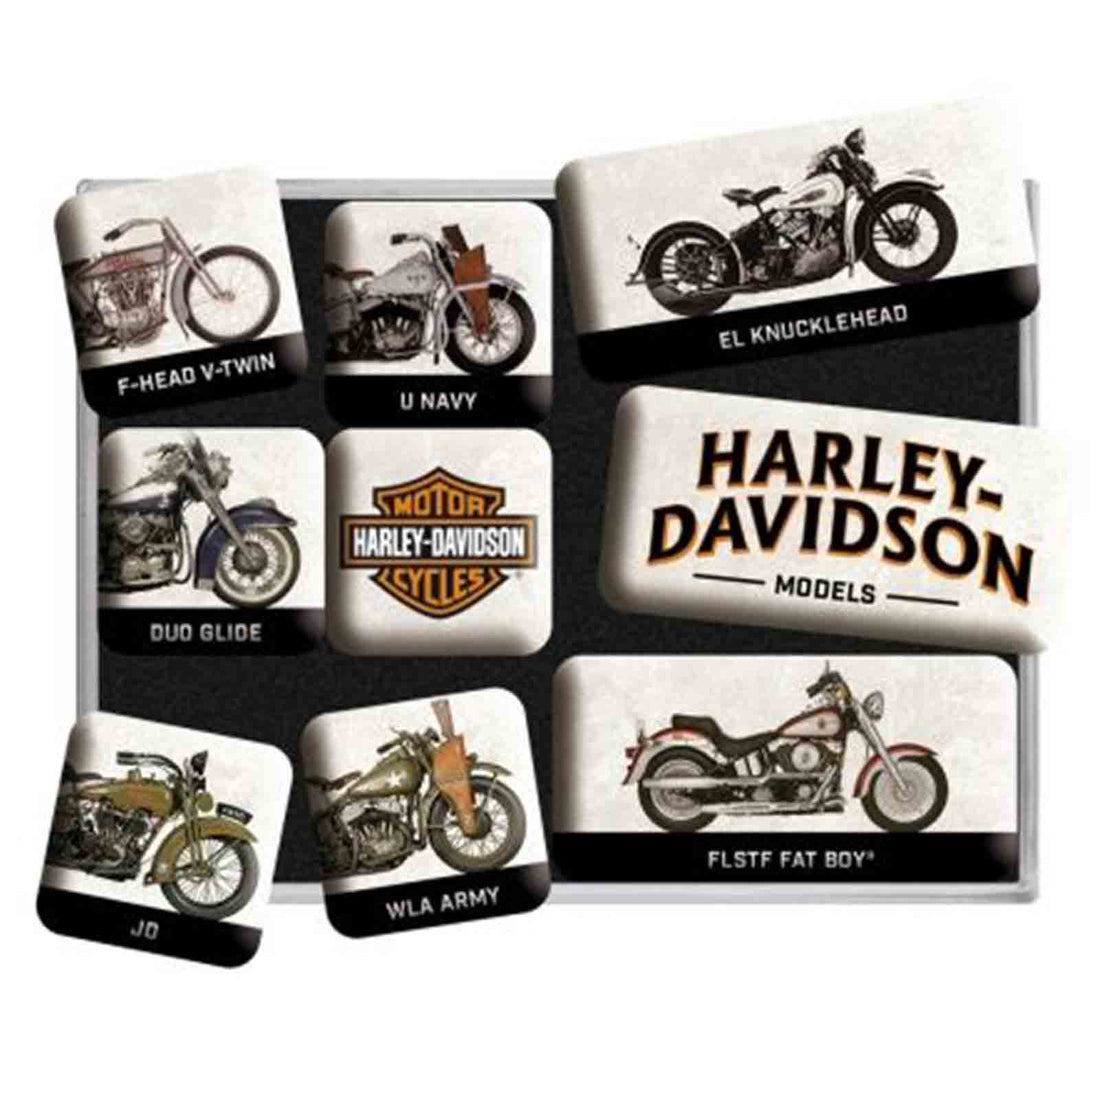 Harley Model Chart Set of 9 Nostalgic Art Magnets